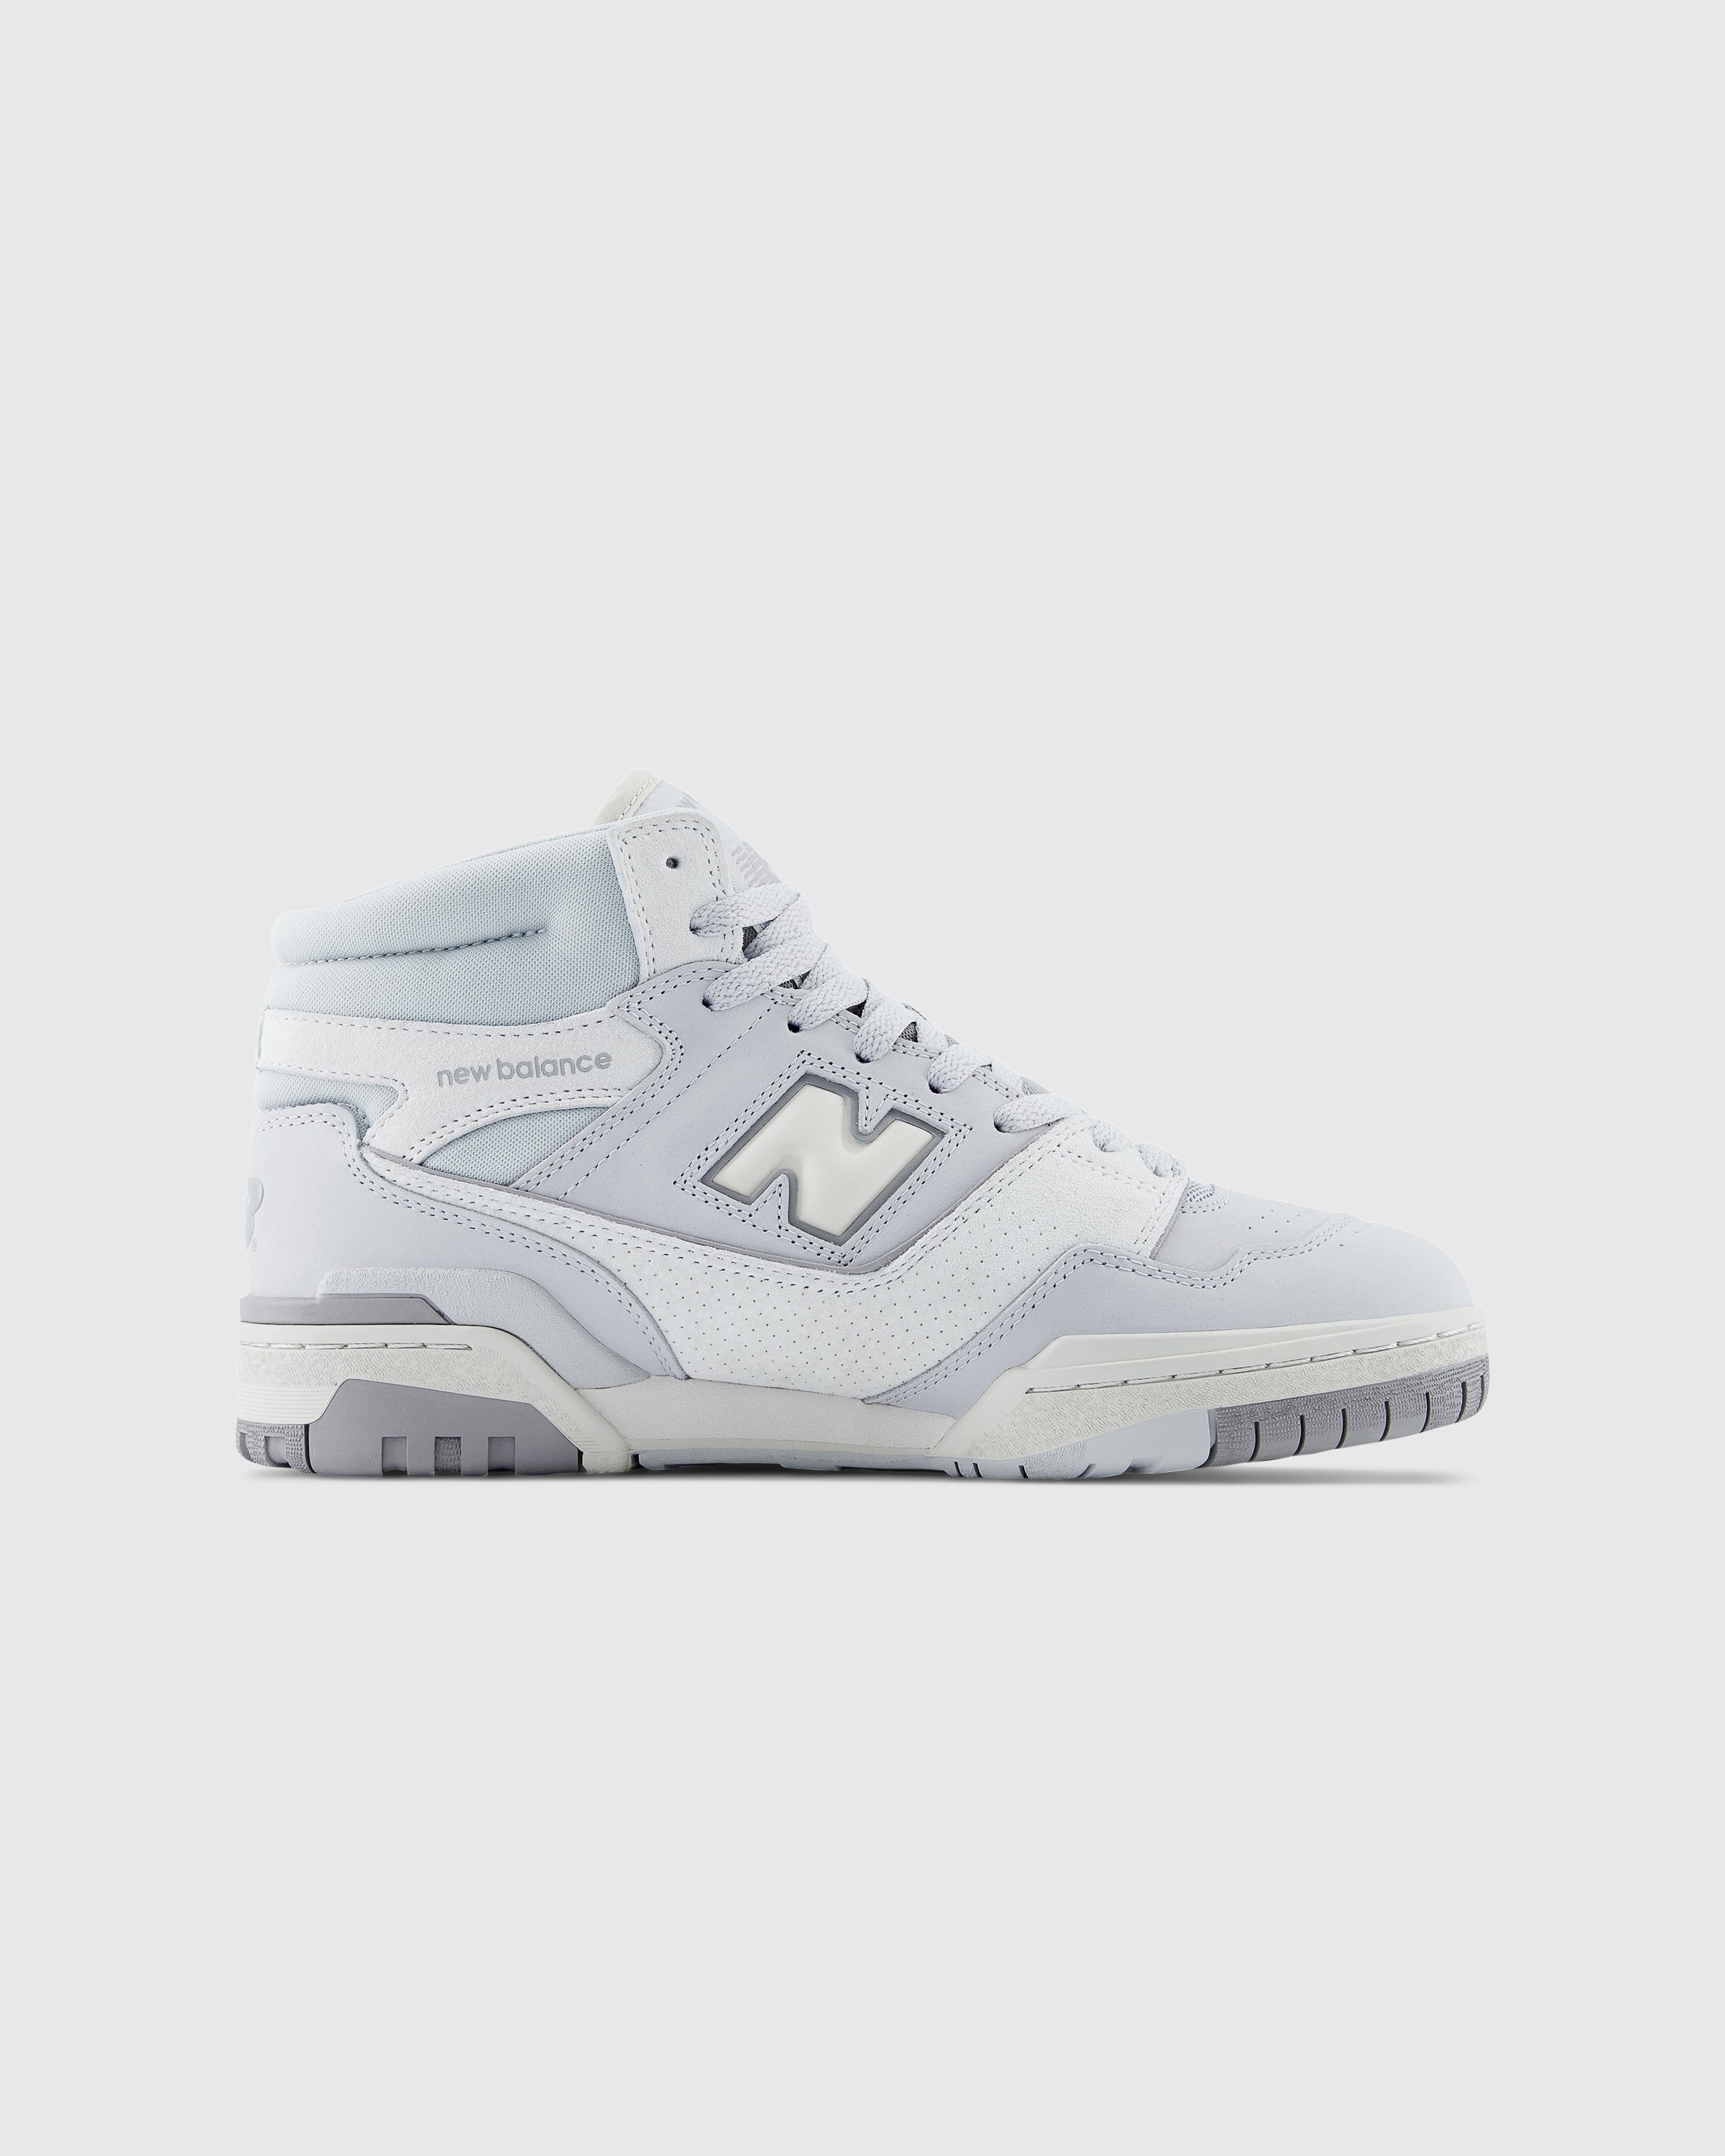 New Balance - BB650RGG Light Aluminum - Footwear - Grey - Image 1